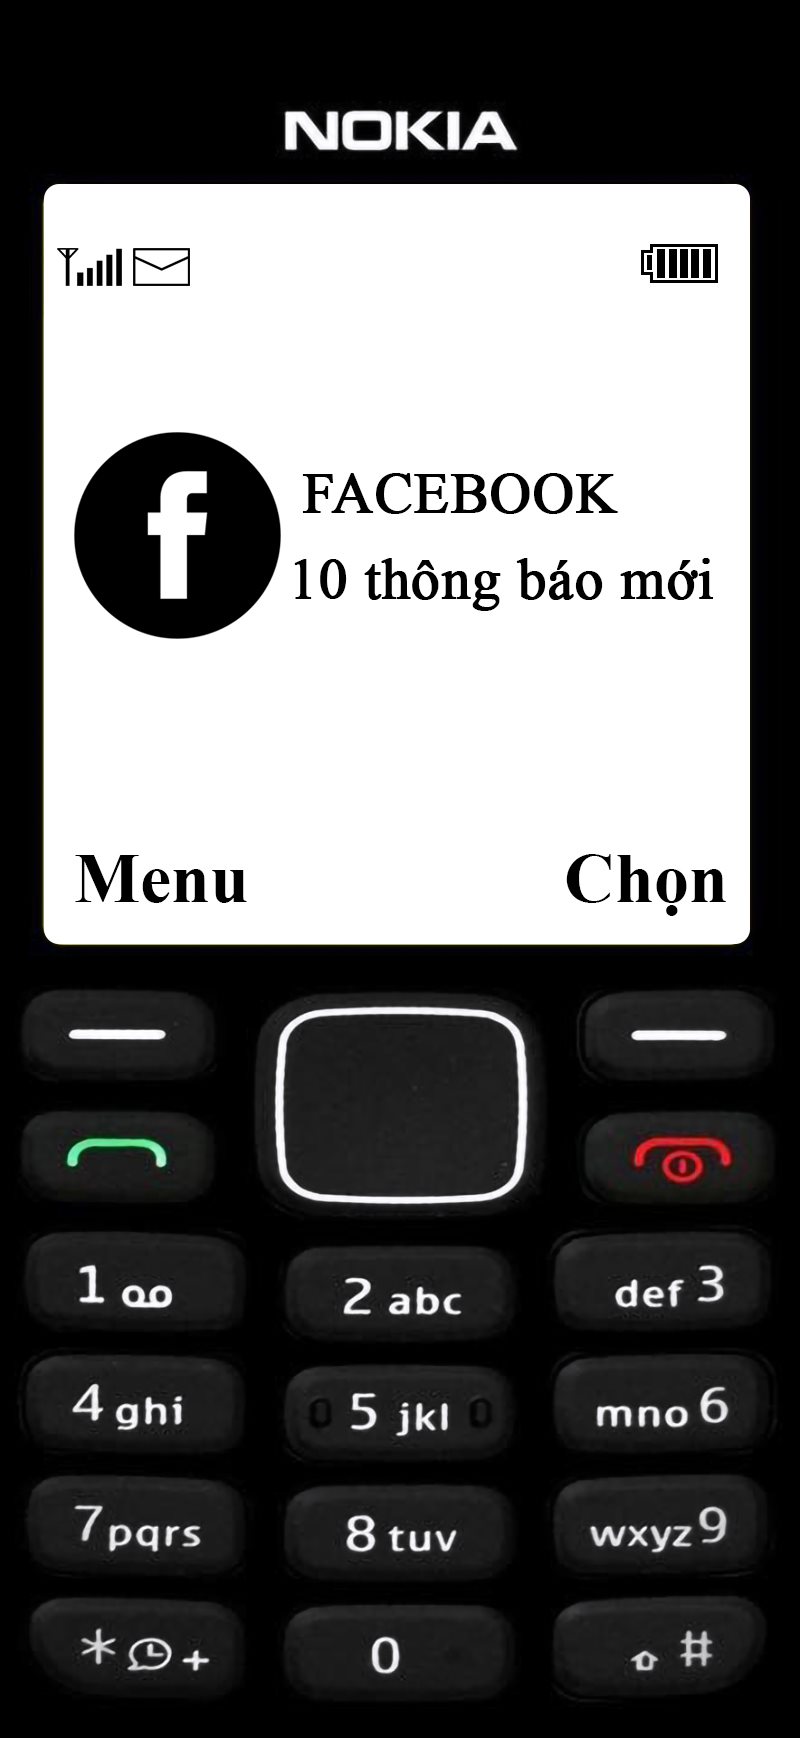 b11-hinh-nen-nokia-1280-cho-samsung-oppo-tren-iphone-anh-nen-nokia-1280-danh-cho-smartphone-dien-thoai-cam-ung.jpg